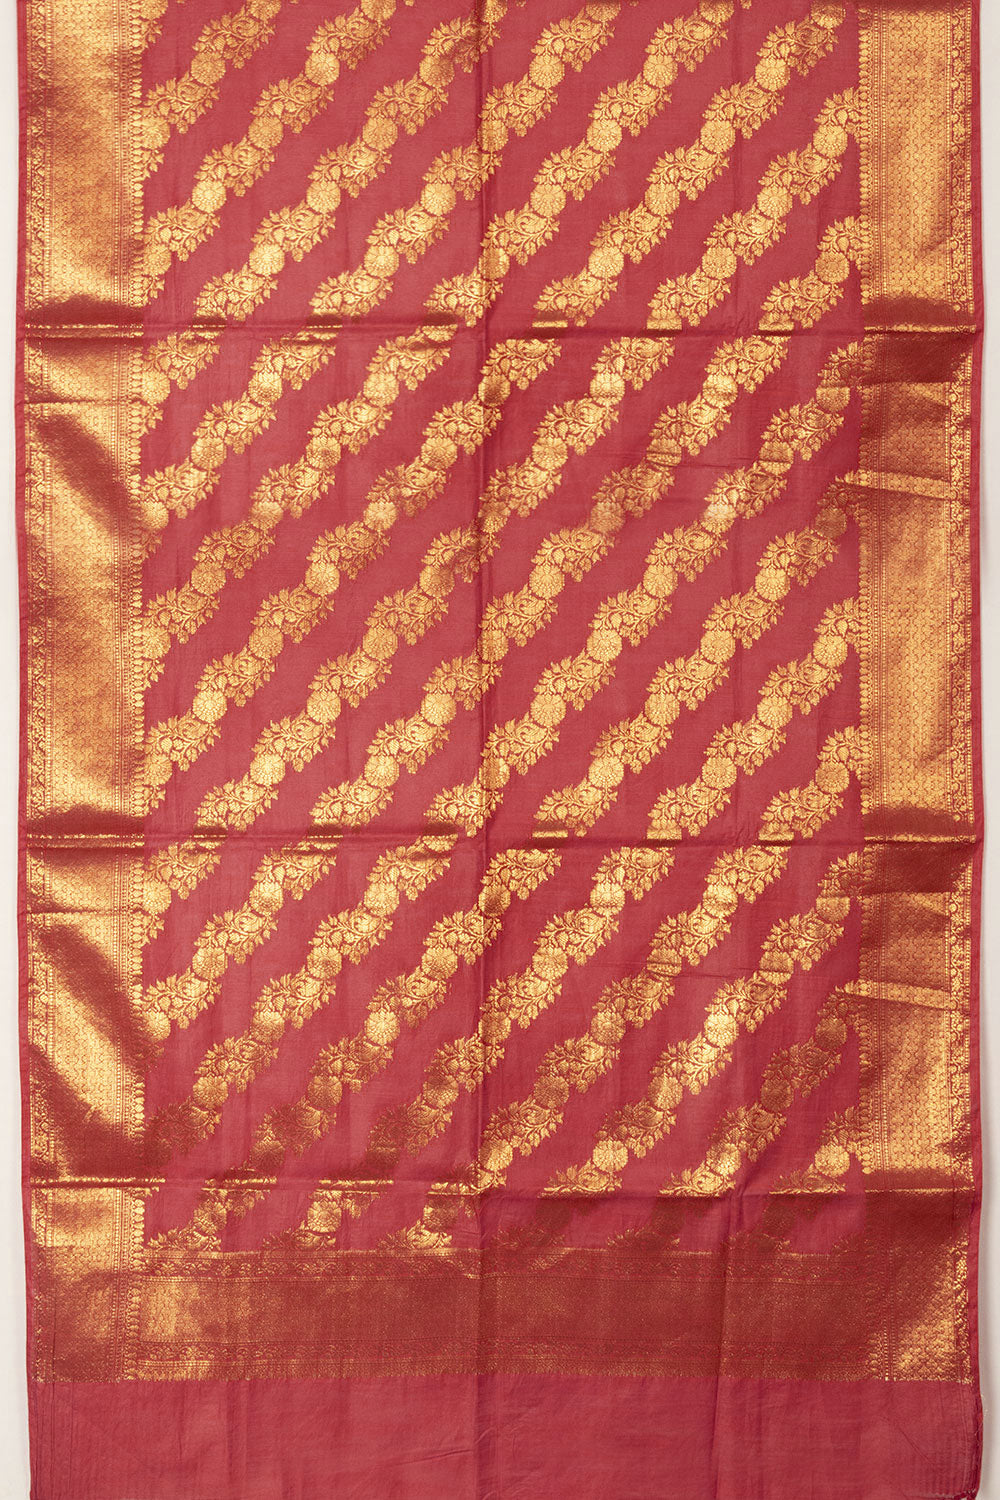 Red 3 Piece Banarasi Silk Cotton Salwar Suit Material - Avishya